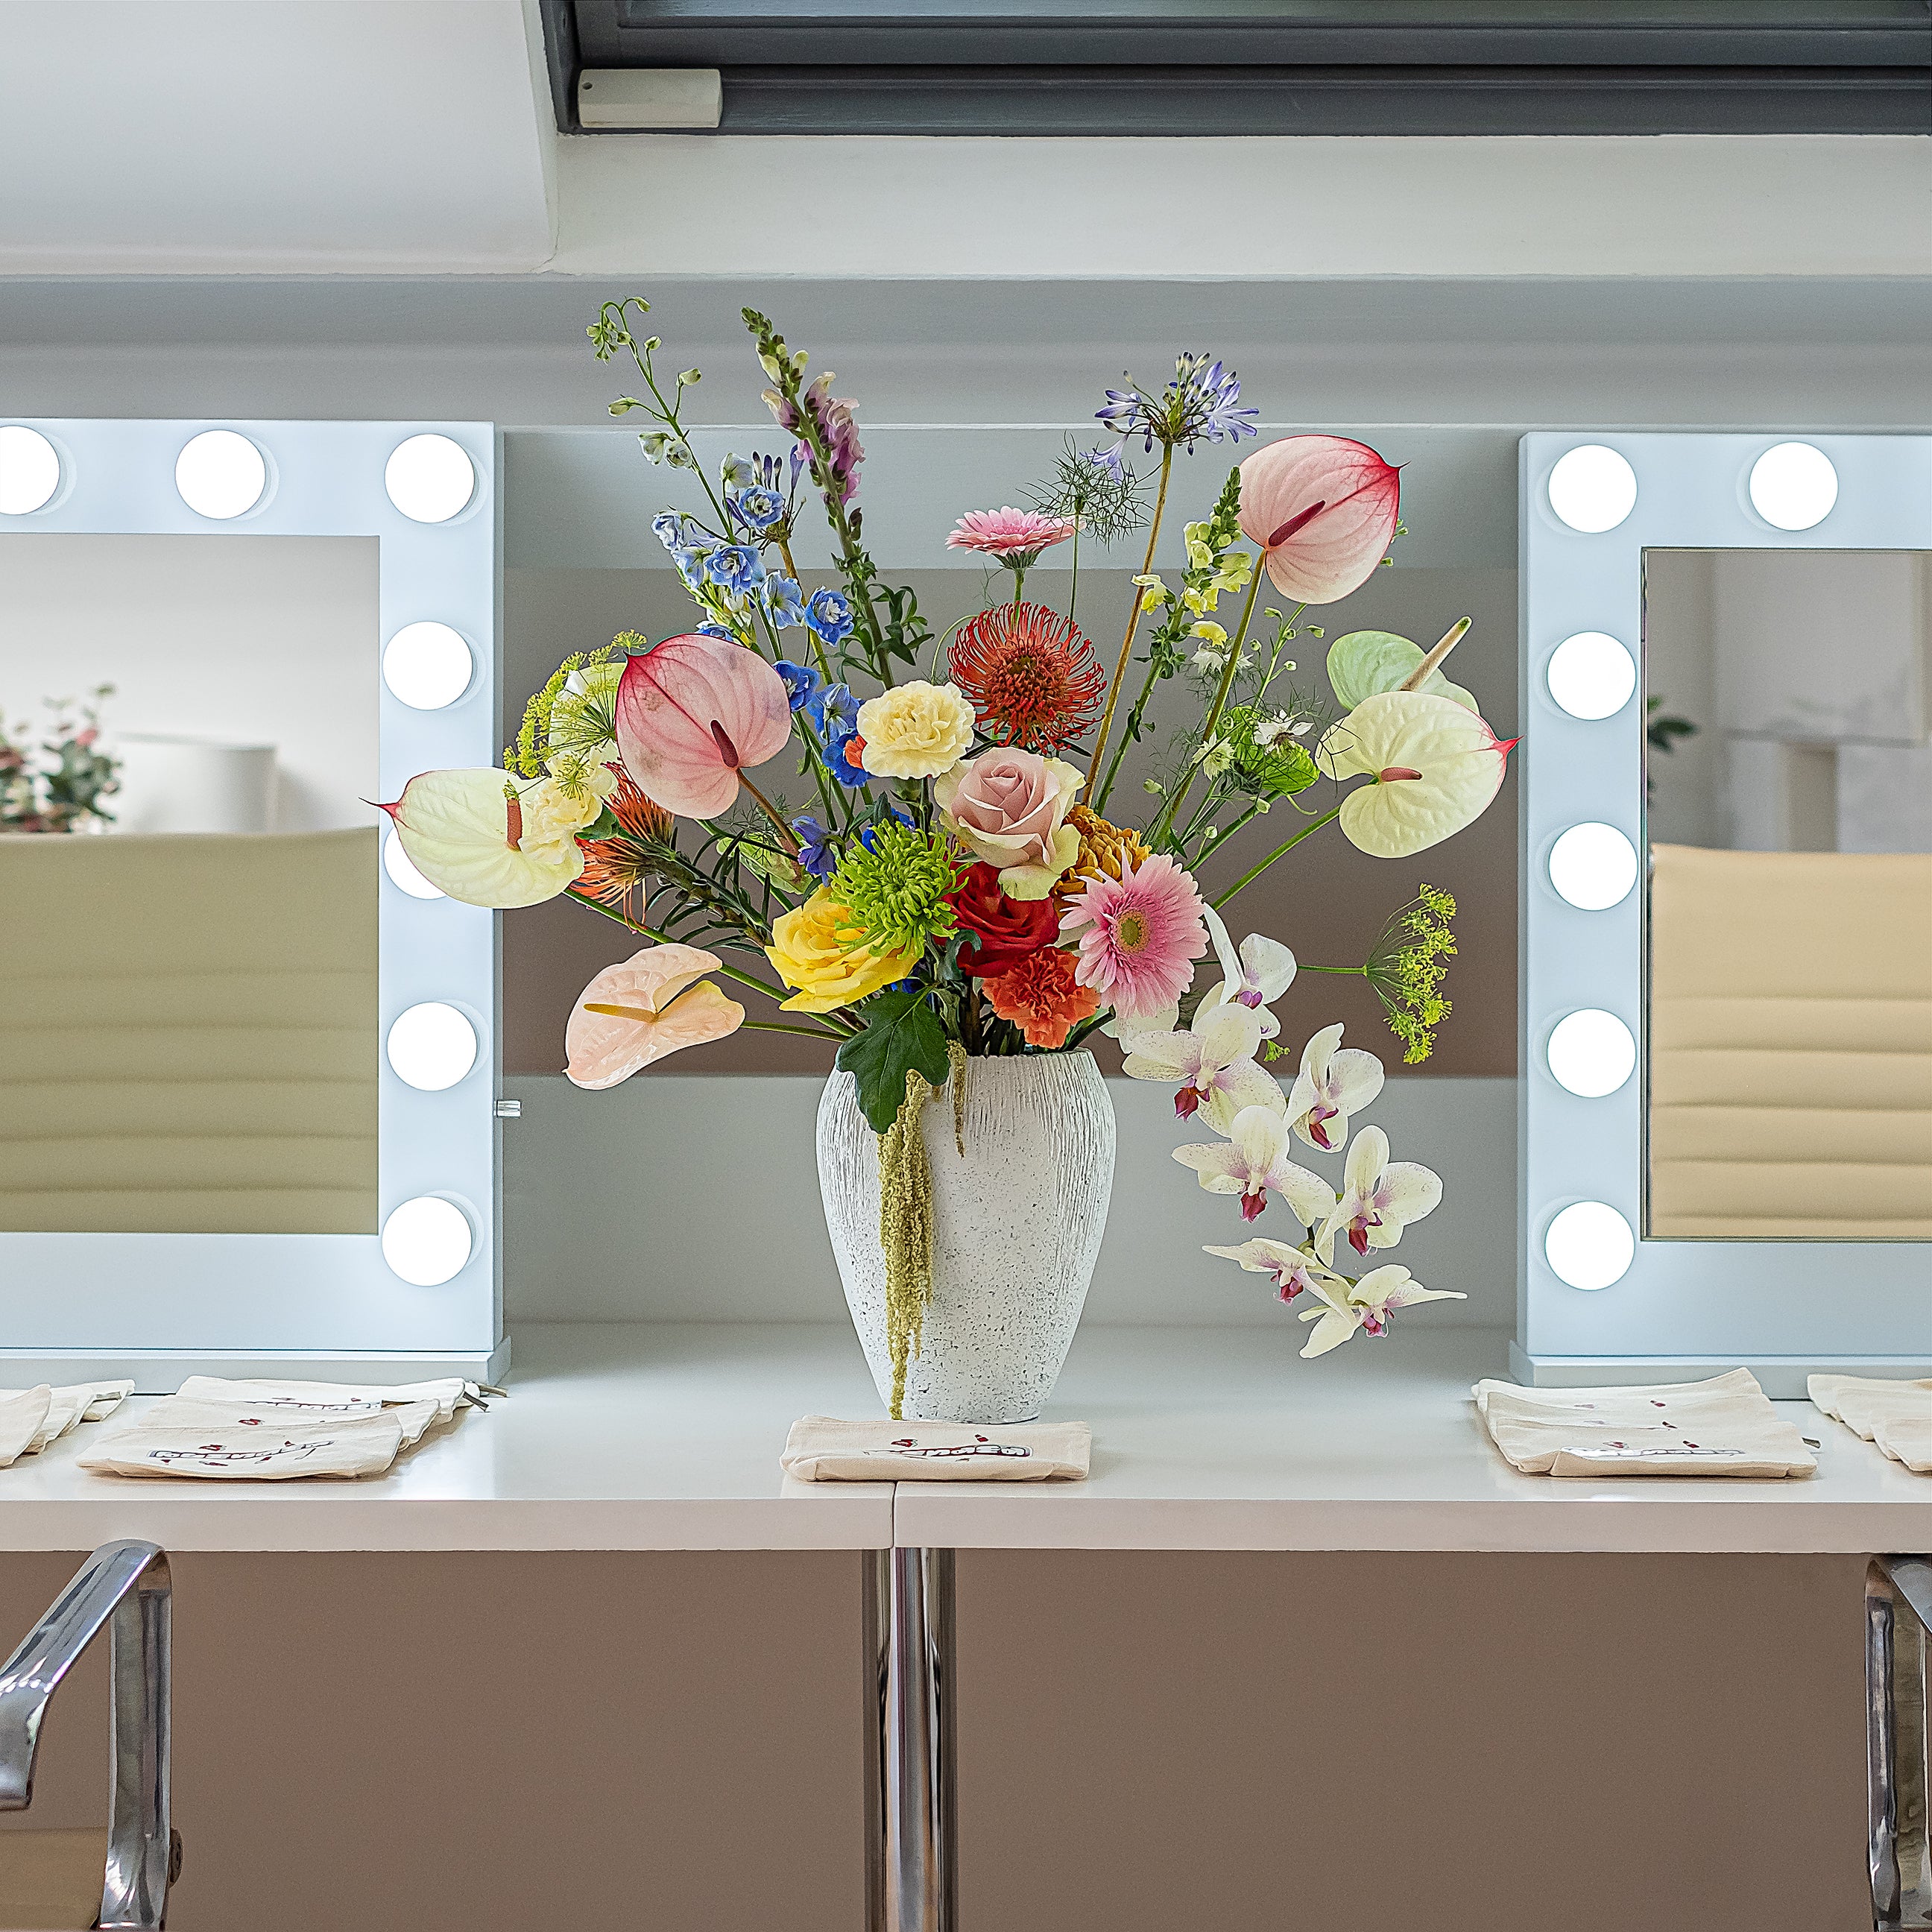 A beautiful, colourful floral vase arrangement created by event florist Amaranté London for a client for an influencer event.